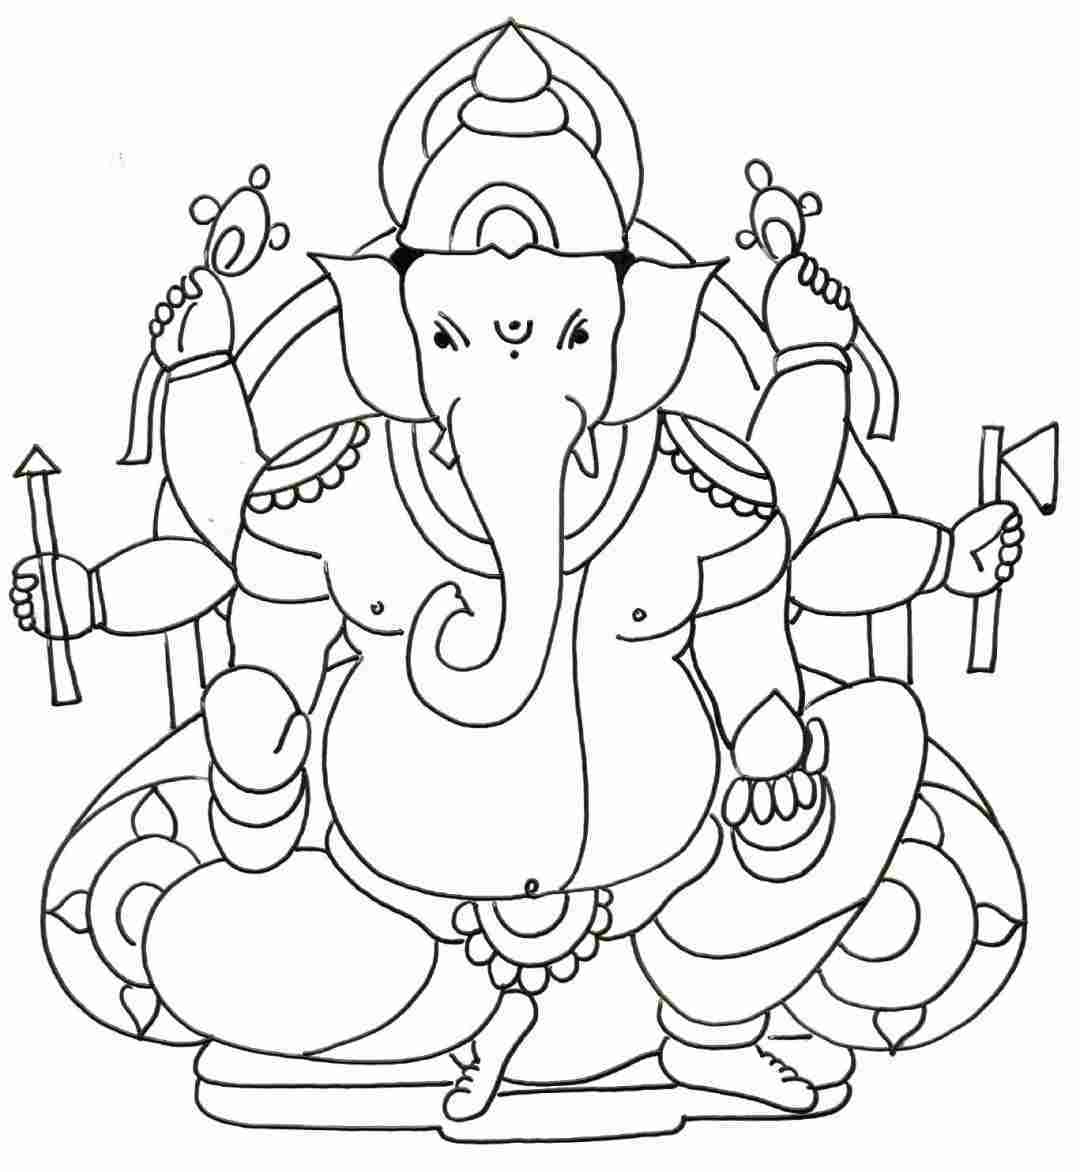 Simple Sketch Of Lord Ganesha at Explore